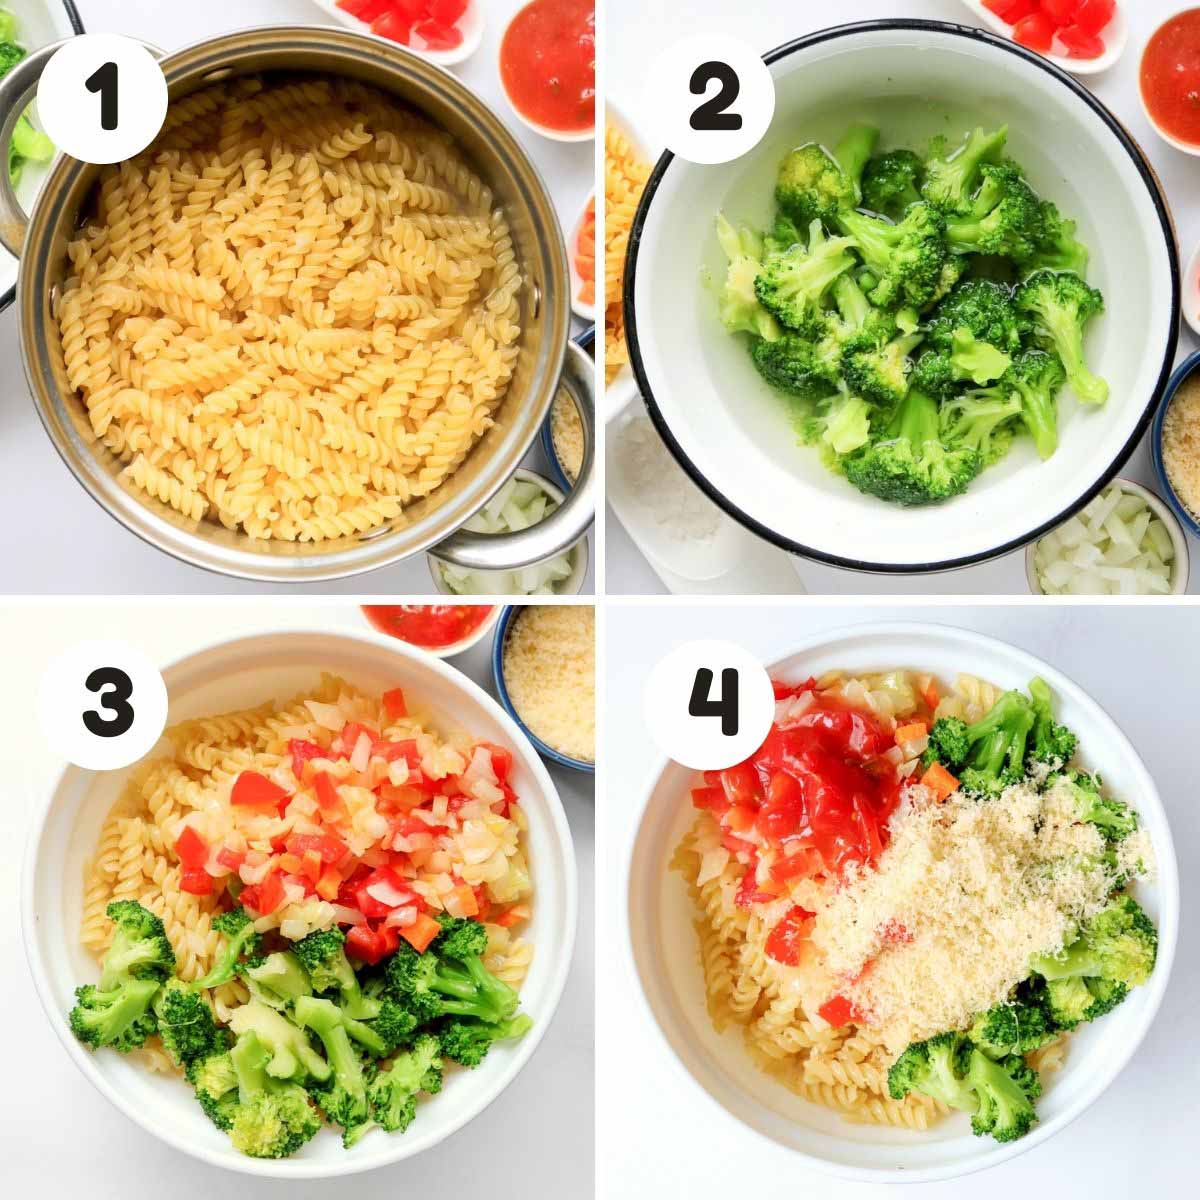 Steps to make the pasta salad.